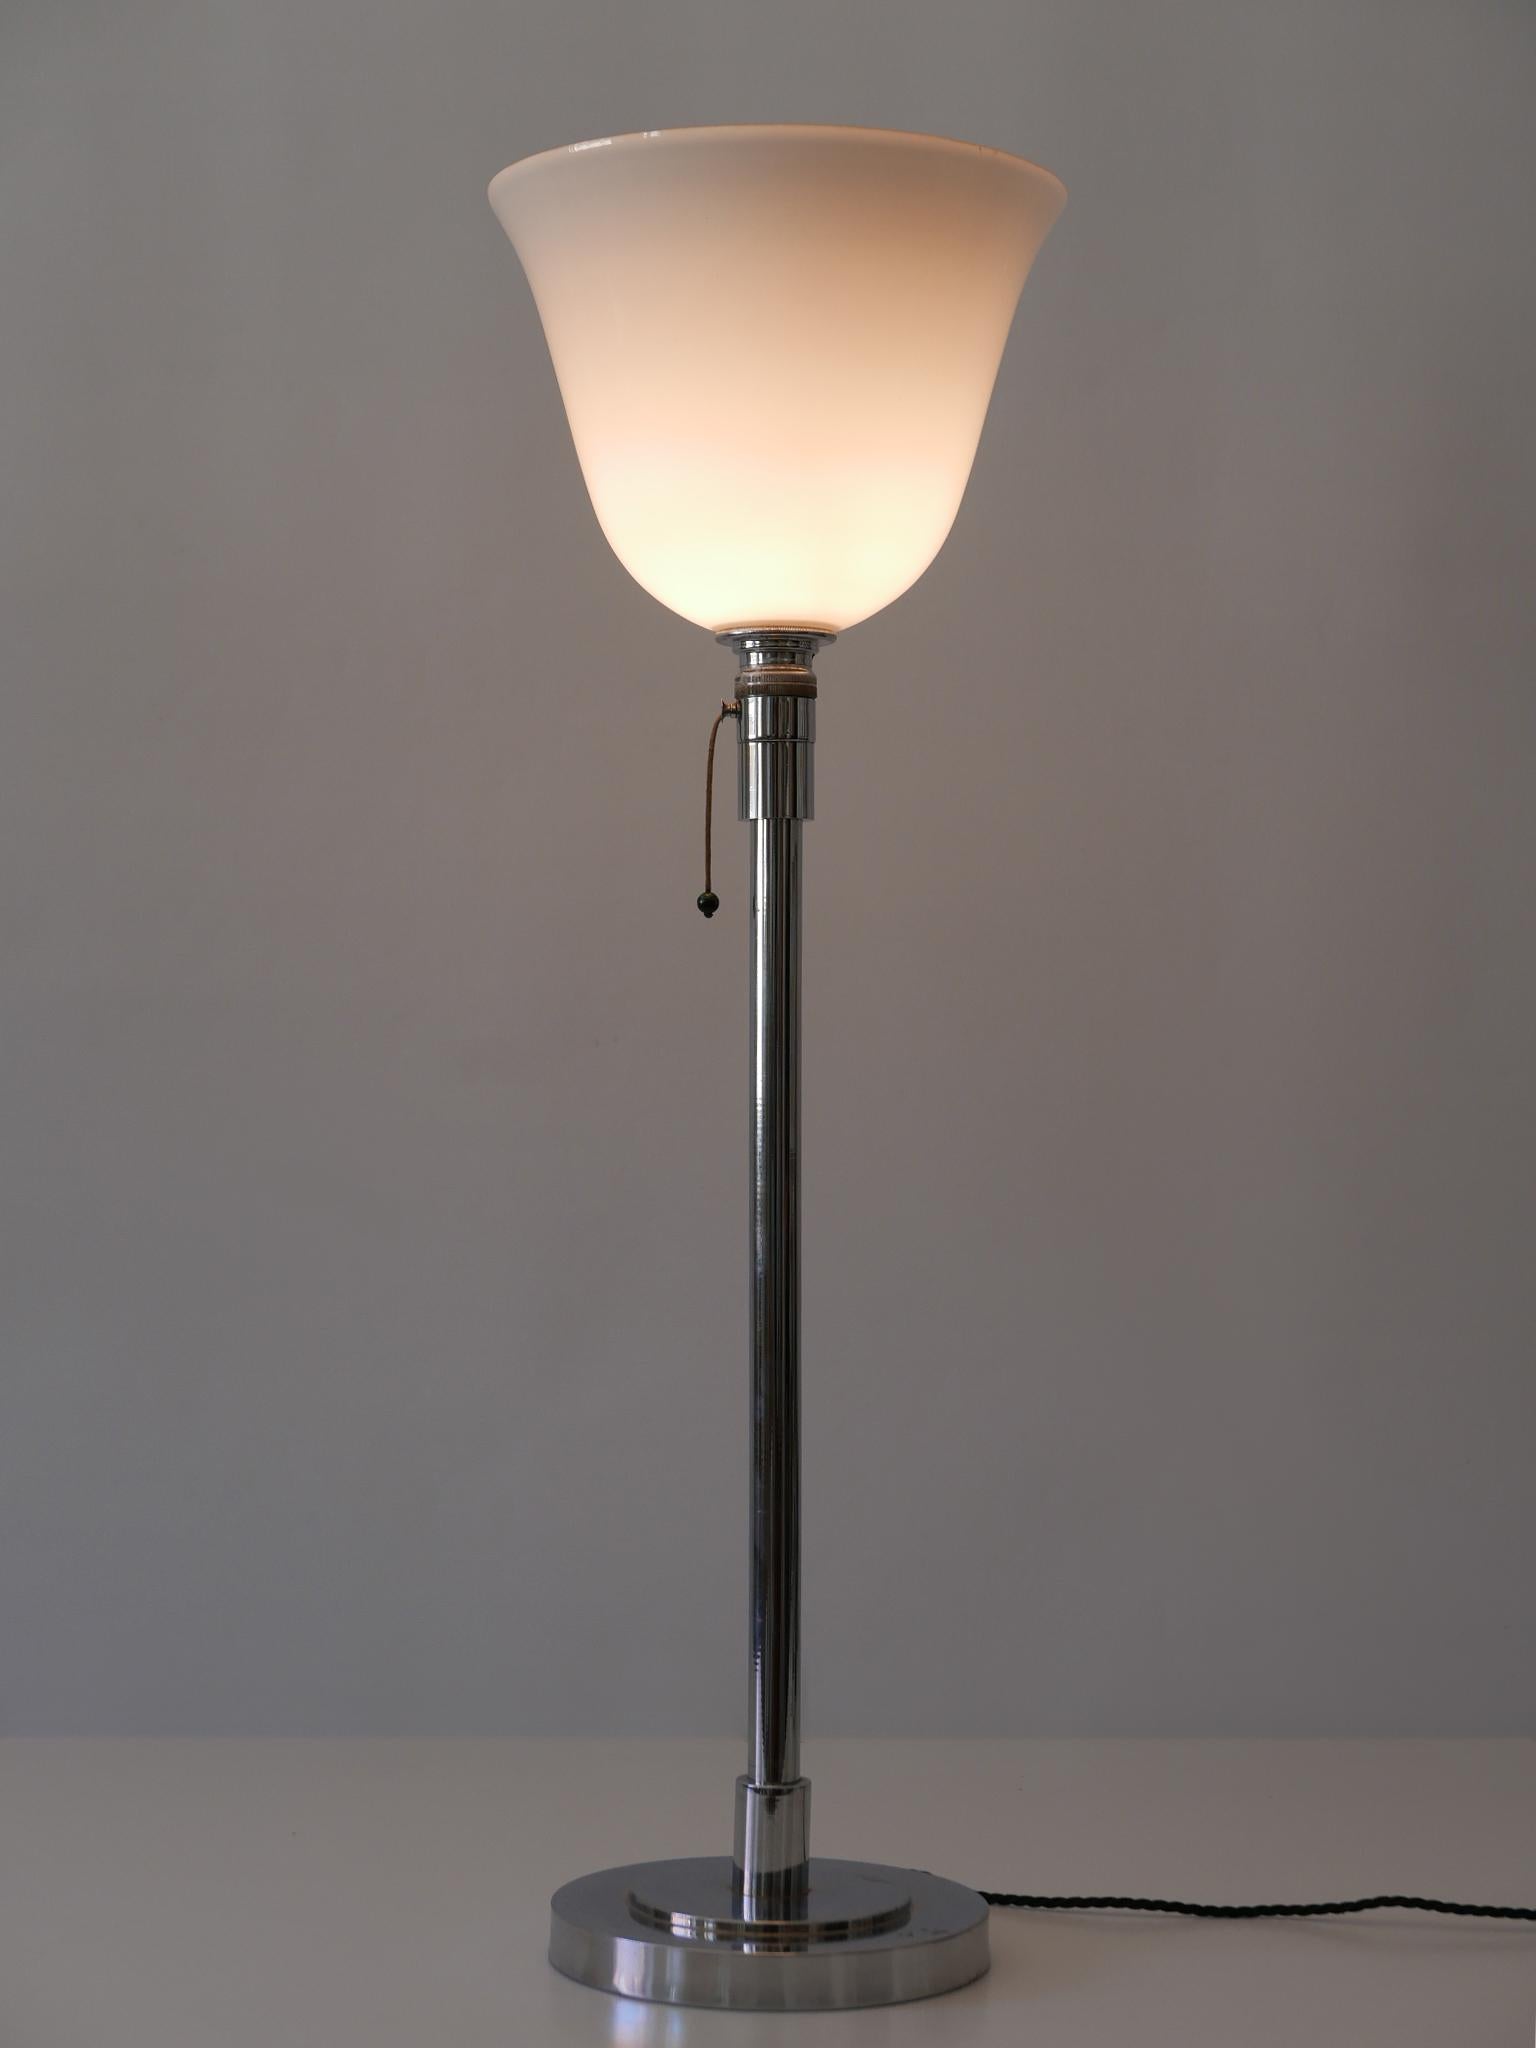 Elegant Art Deco Bauhaus Table Lamp or Floor Light by Mazda Paris, France, 1930s For Sale 5